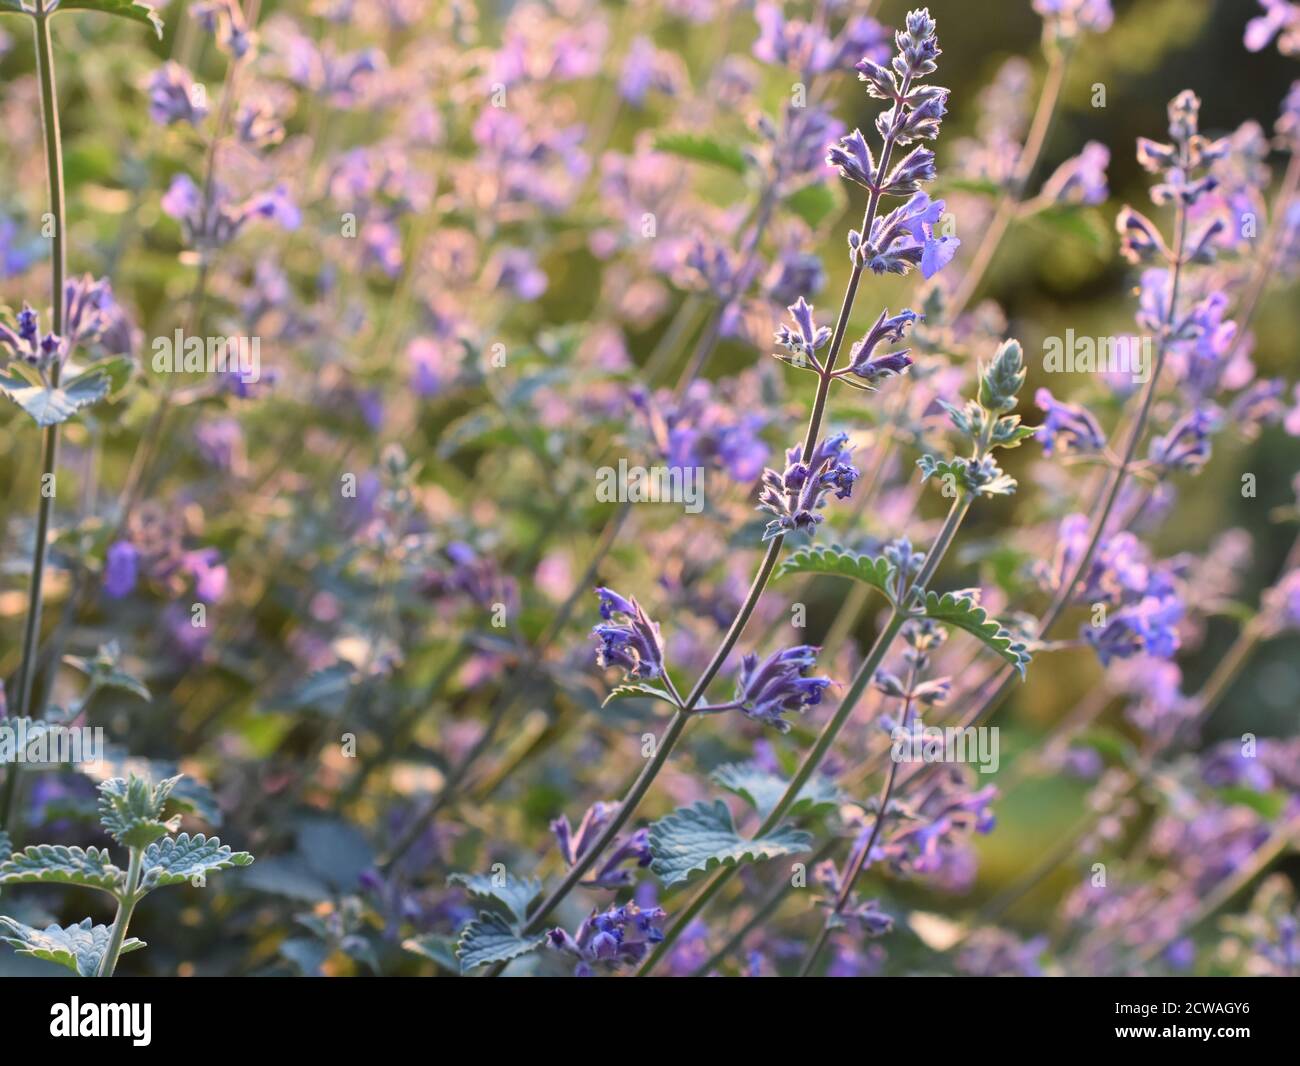 Field of catnip flowers Nepeta cataria in a garden Stock Photo